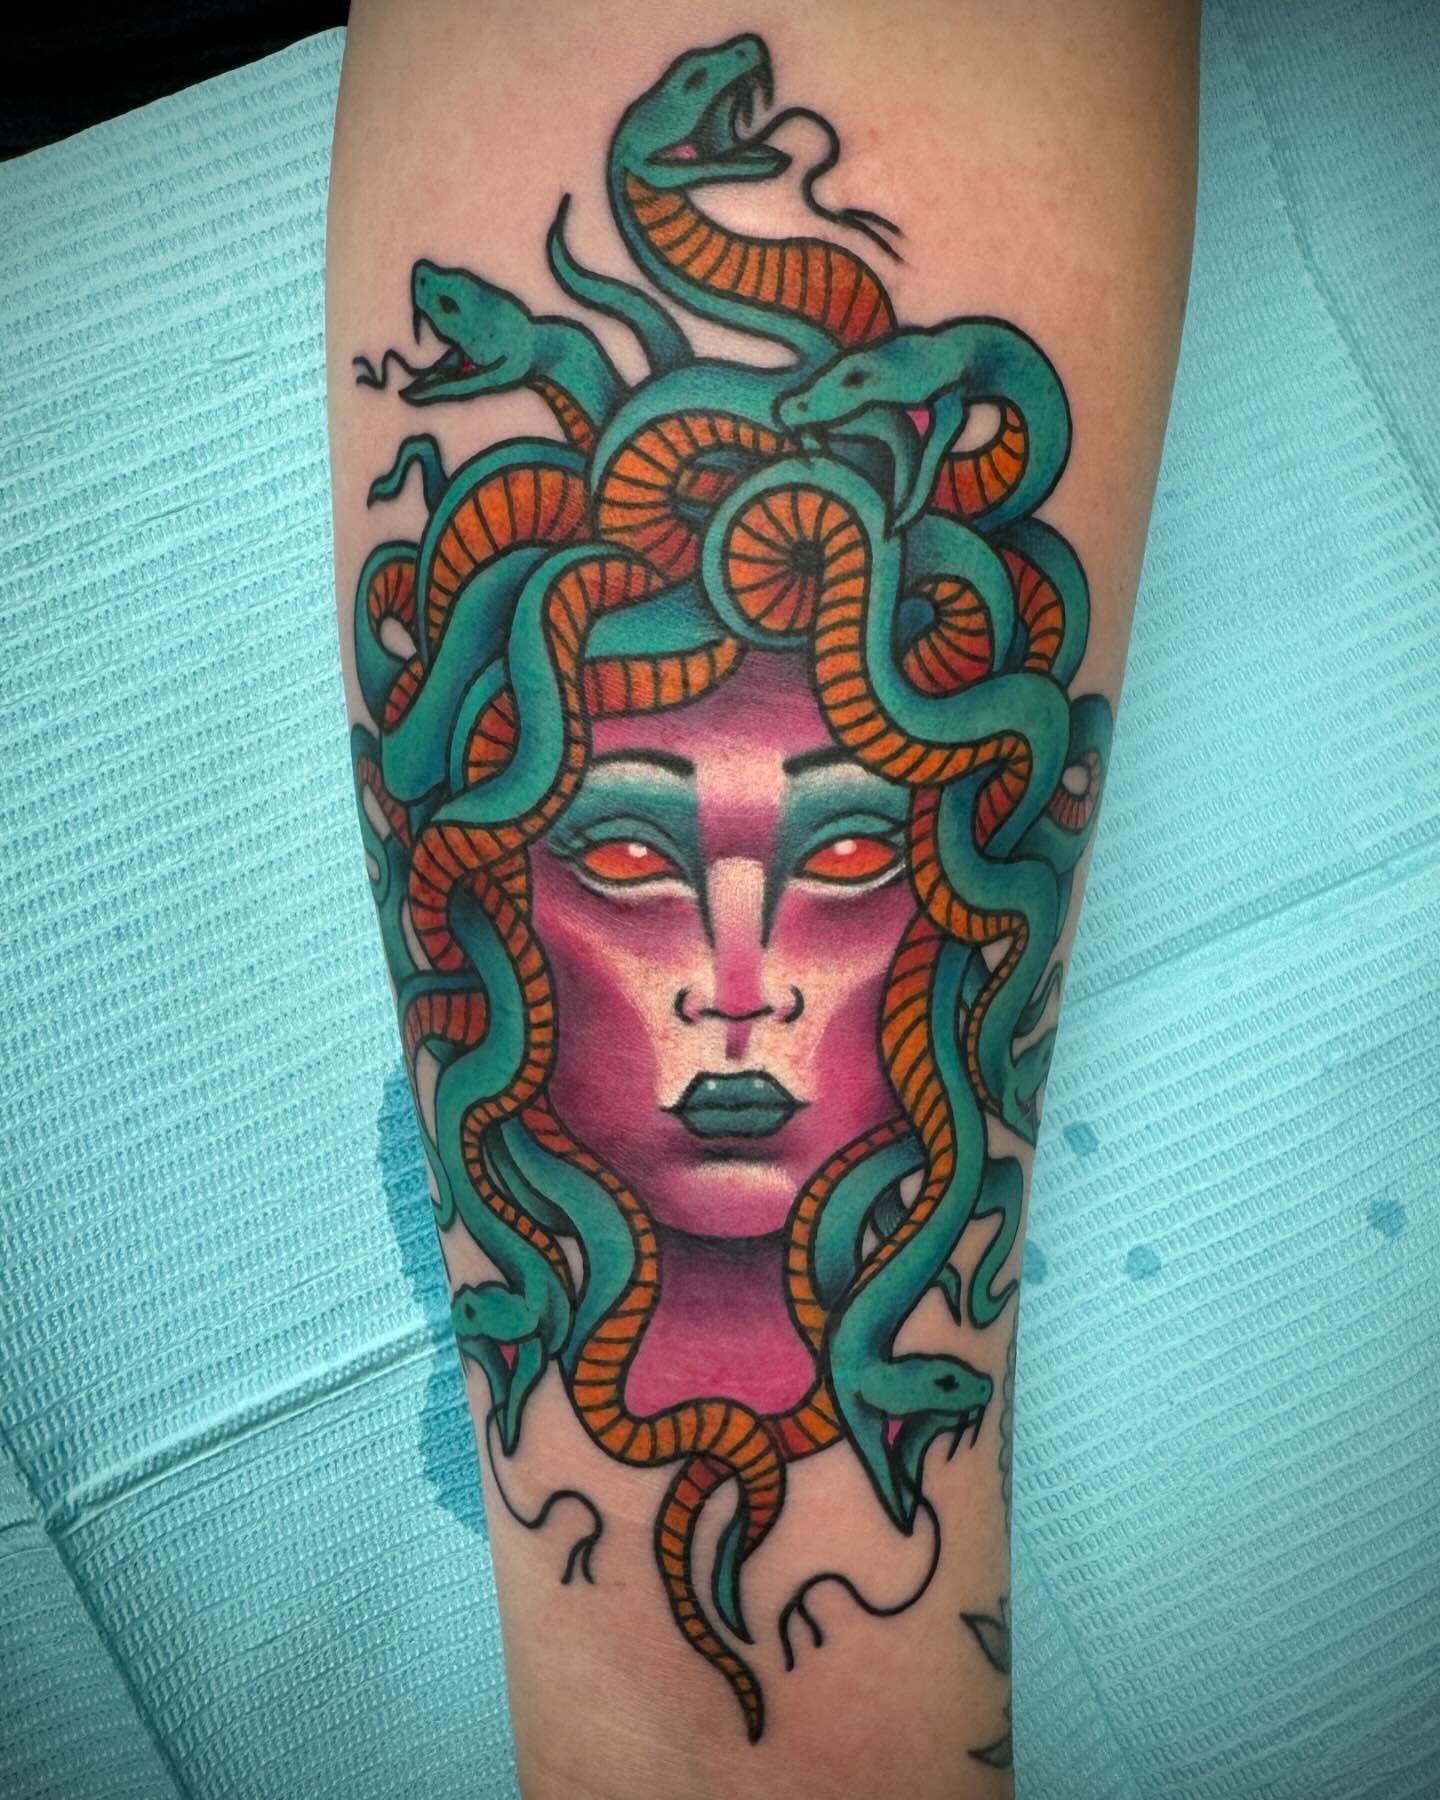 Medusa Tattoo done by Gabe @gabriel_richmond #medusatattoo #tattoo #gallipolisohio #templetattooohio #gallipolisohio #bickneetattoosupply